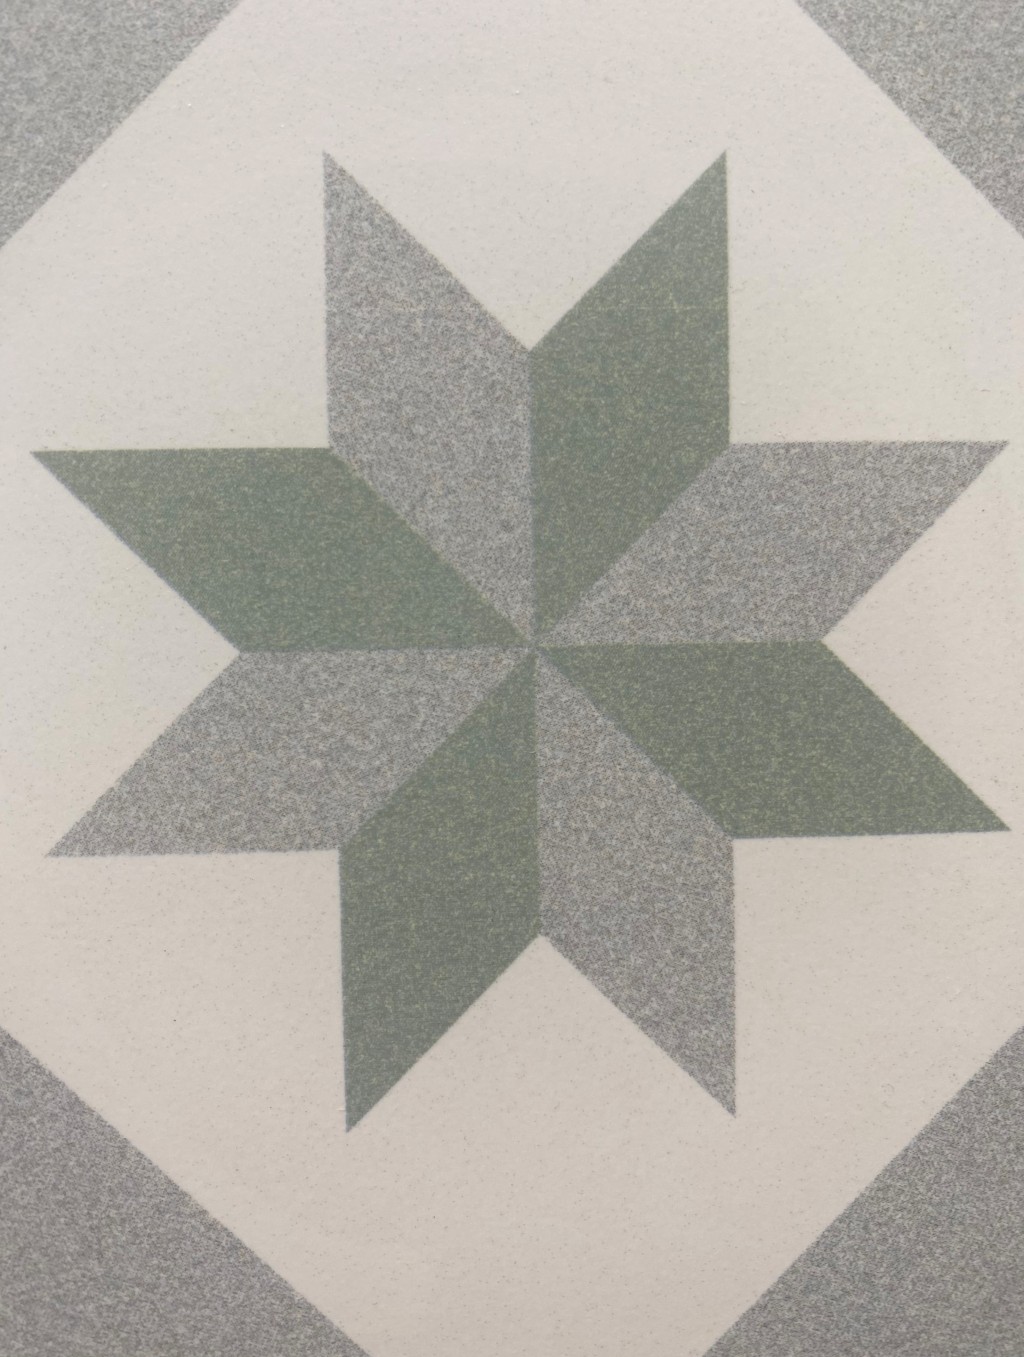 Clifton Grey Ceramic Floor 400x400mm